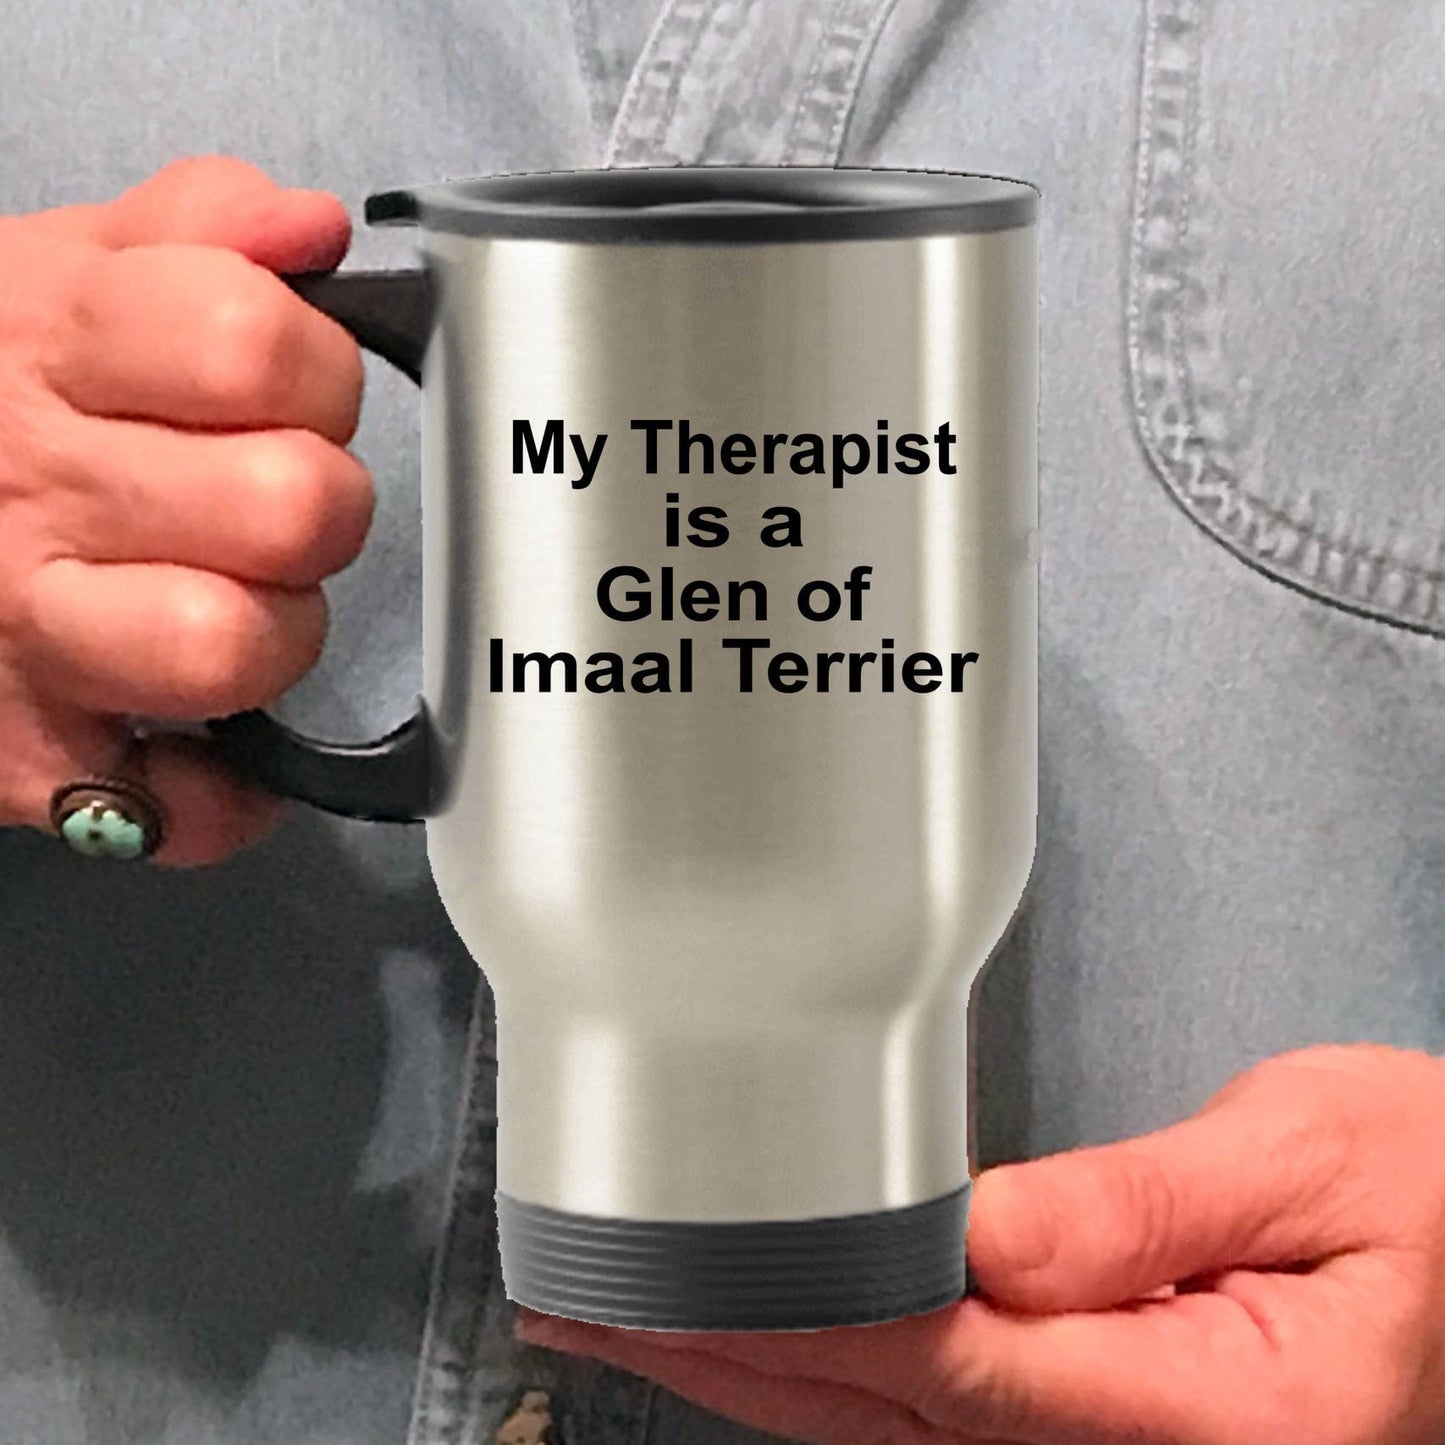 Glen of Imaal Terrier Dog Therapist Travel Coffee Mug